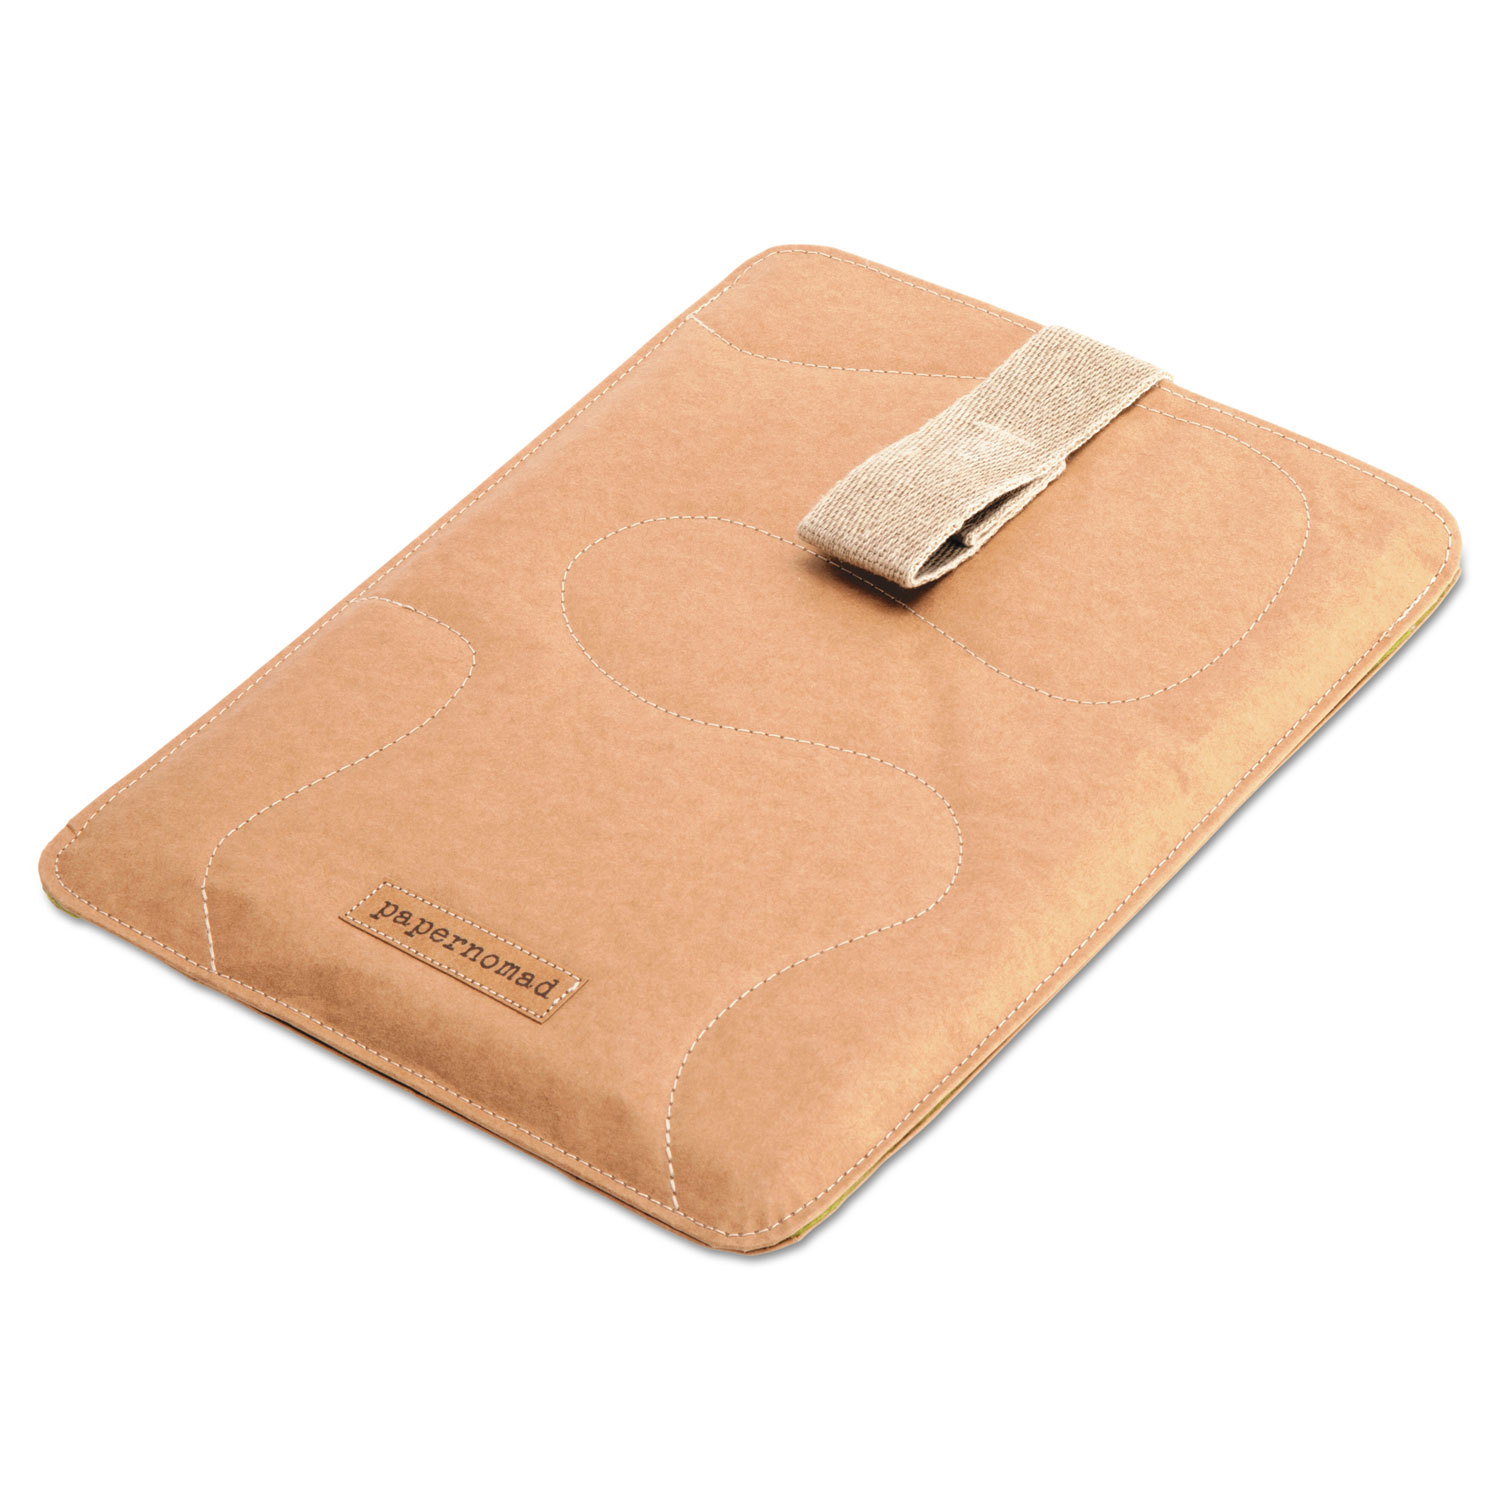 Papernomad Zattere Sleeve for iPad 2/3rd Gen/4th Gen, Beige